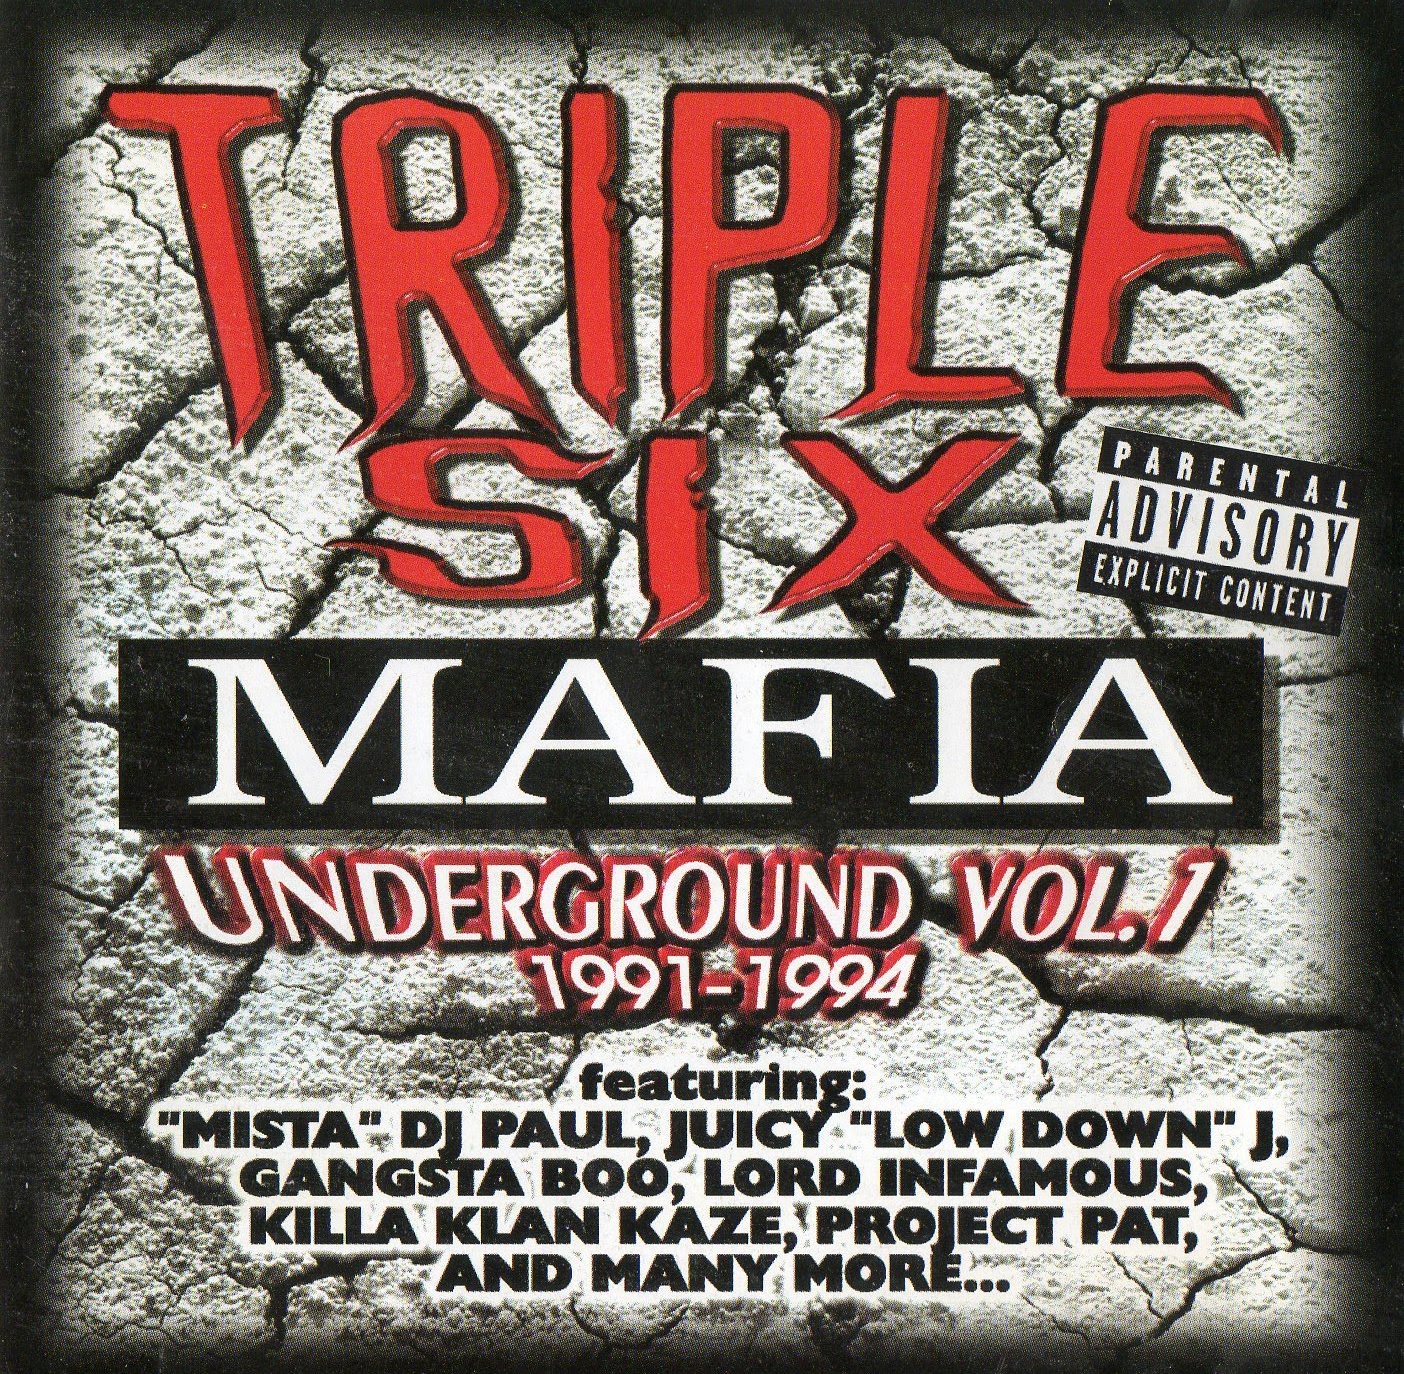 three six mafia underground vol 1 download